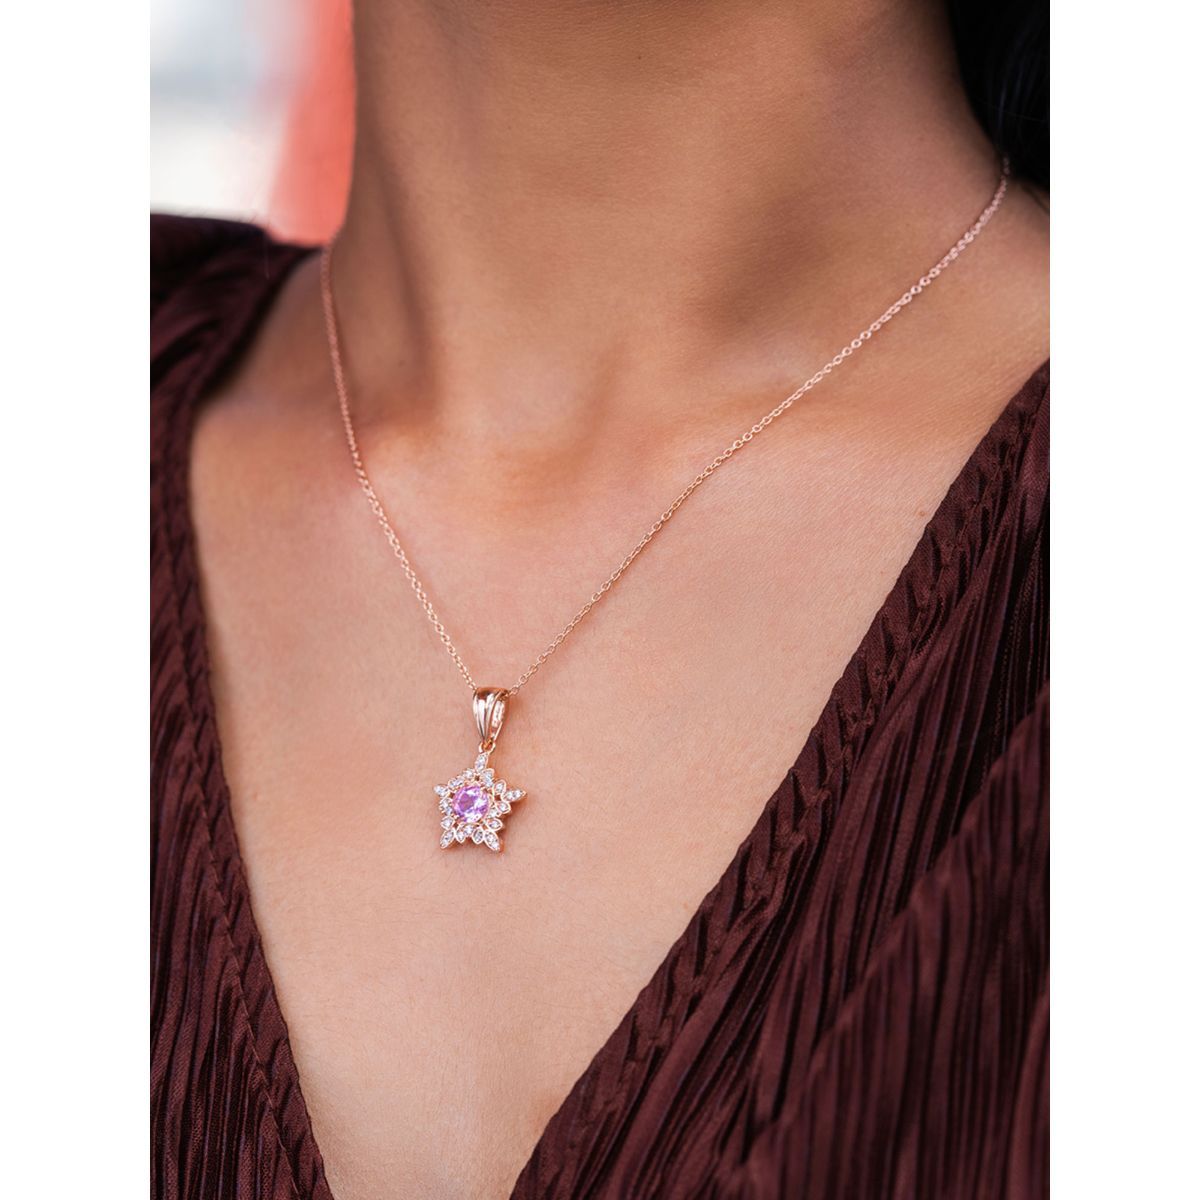 Neon Pink Star Necklace, Resin Pendant, Black, UV Reactive Rave Jewelry -  Etsy